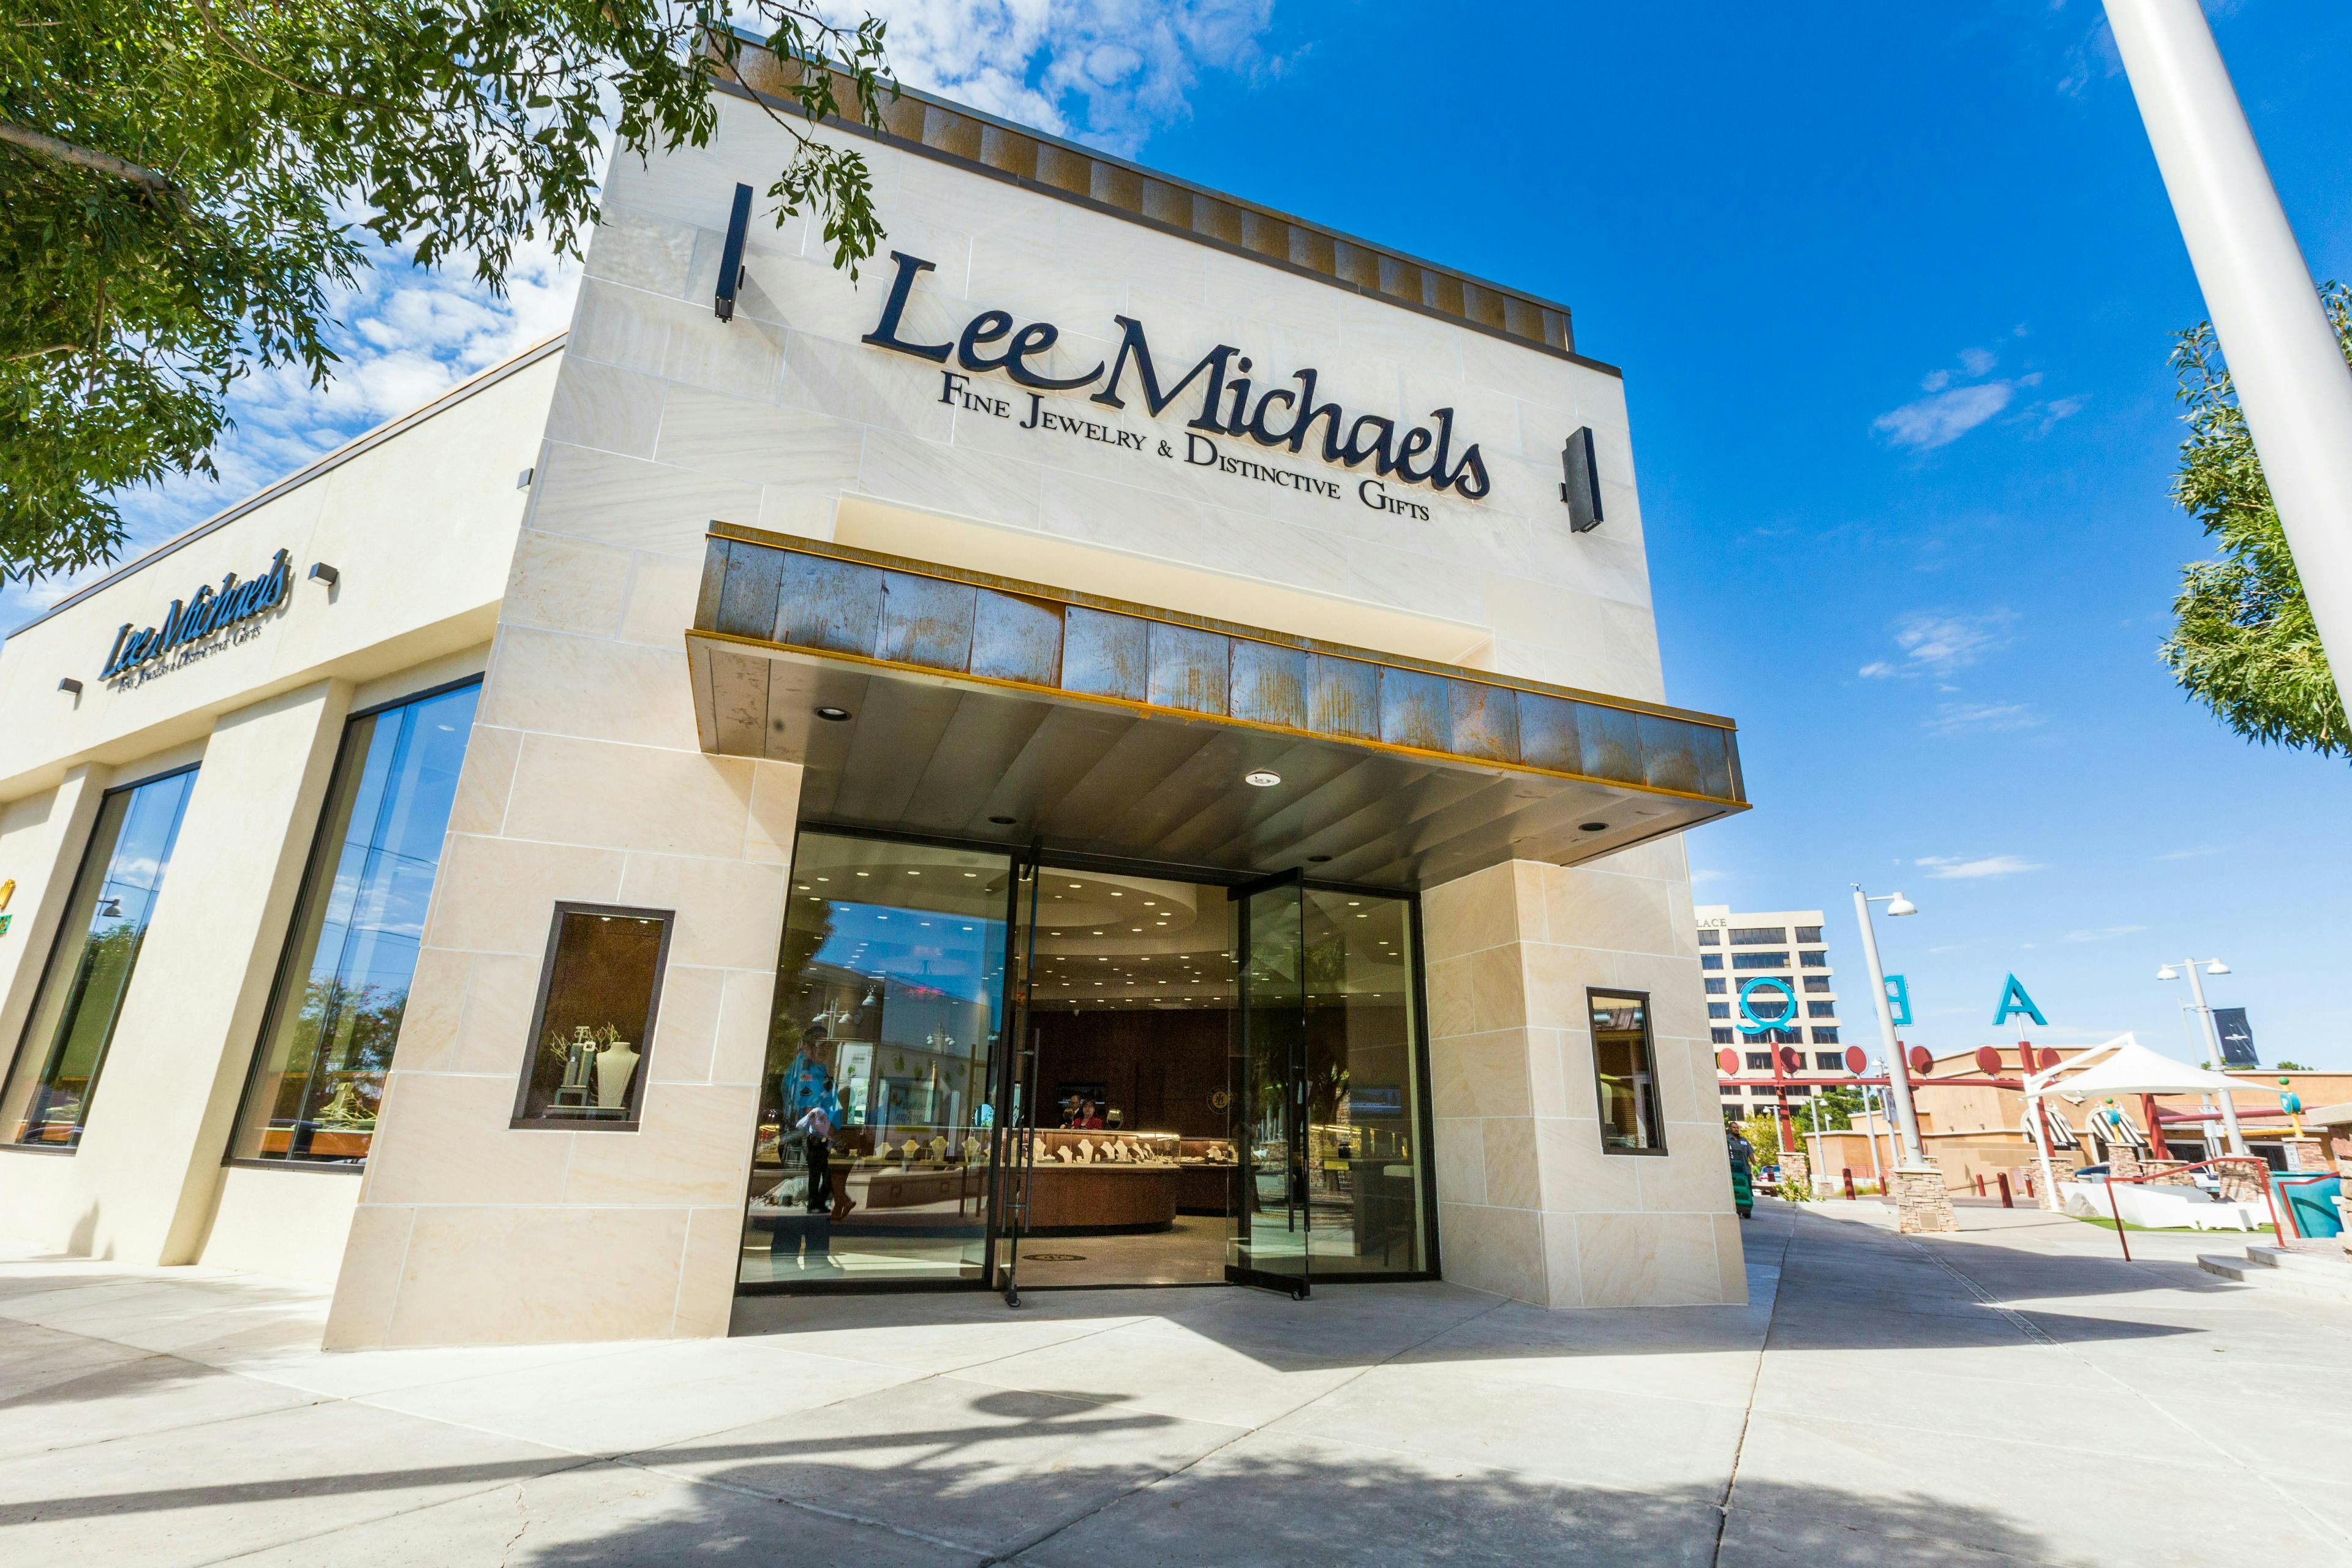 Lee Michaels in Albuquerque New Mexico